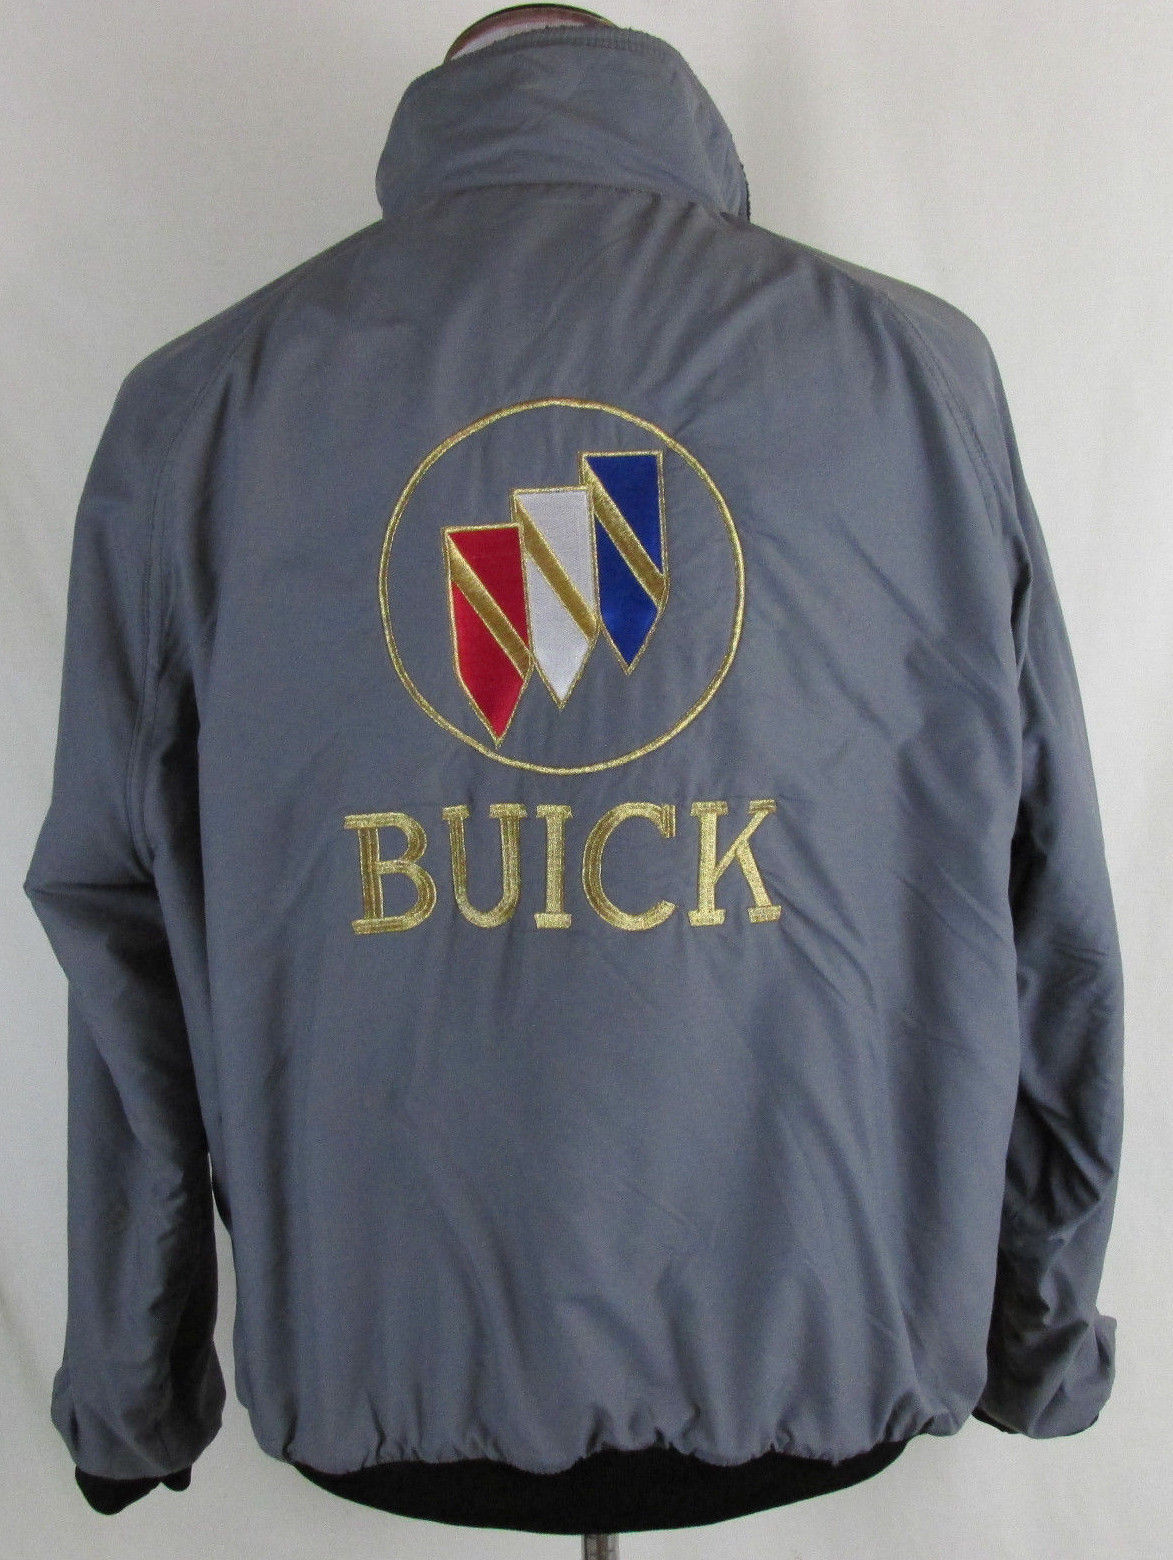 Buick Coat Jacket Overalls – Buick Turbo Regal